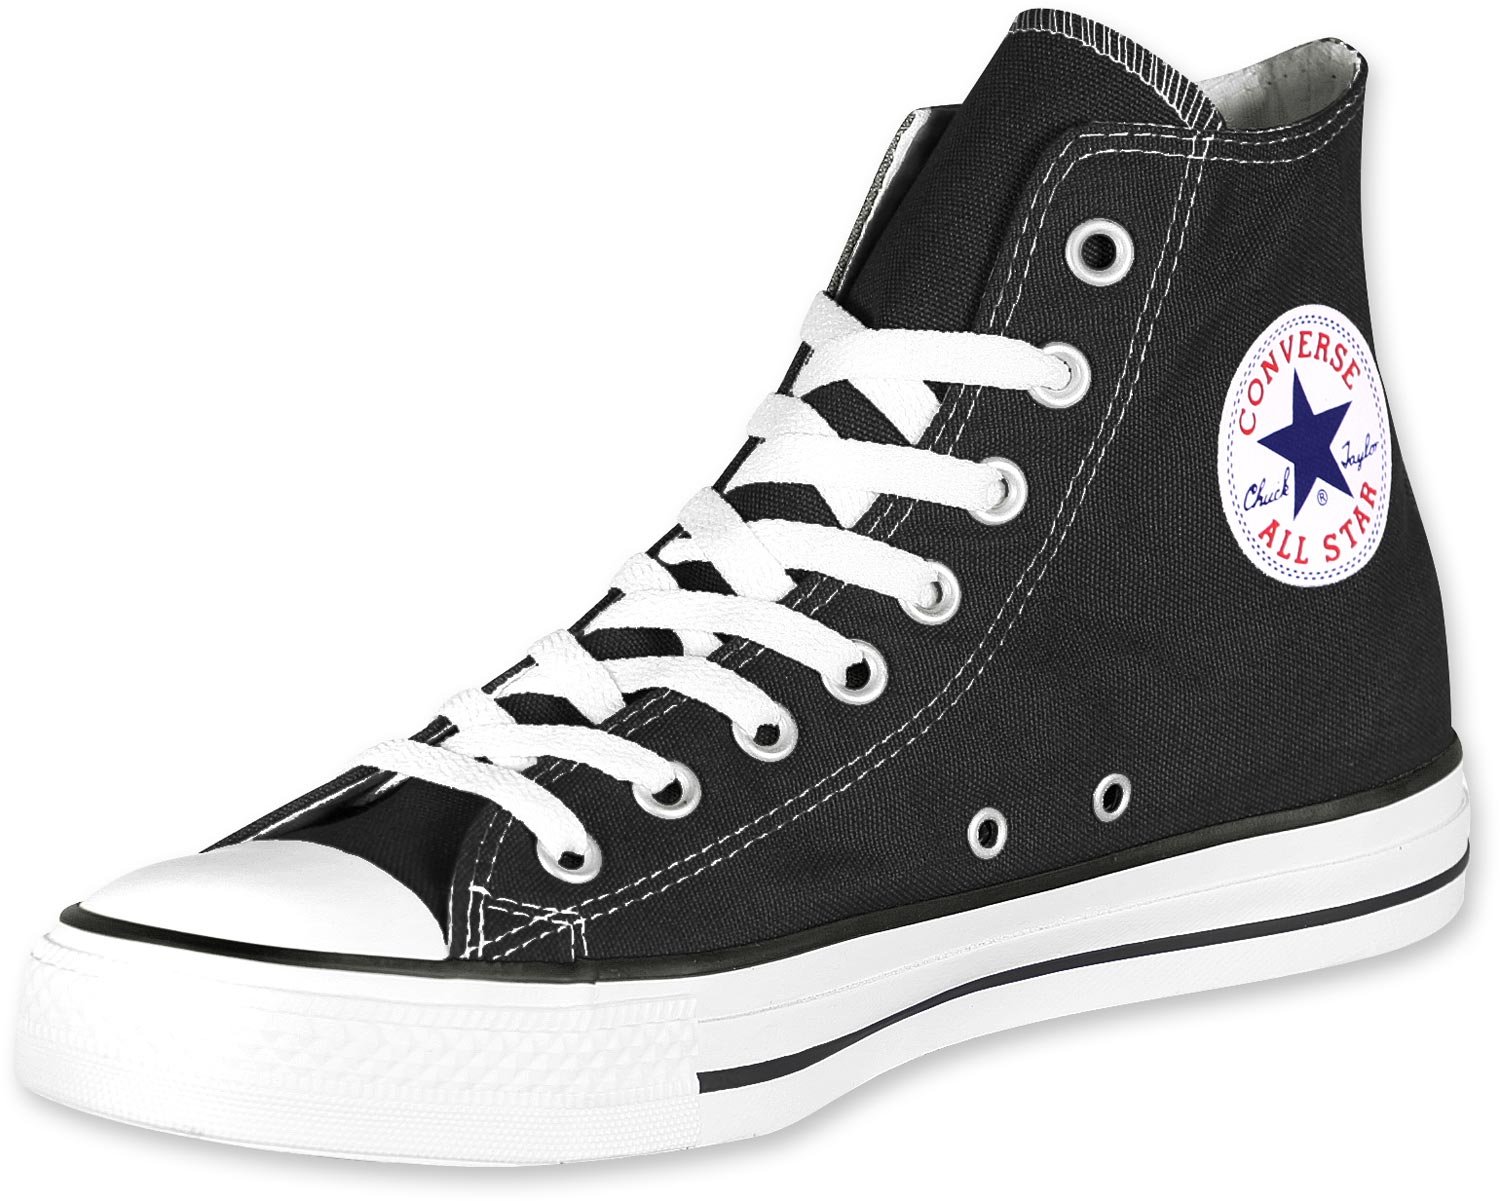 Converse Unisex-Adult Chuck Taylor All Star High Top Sneaker